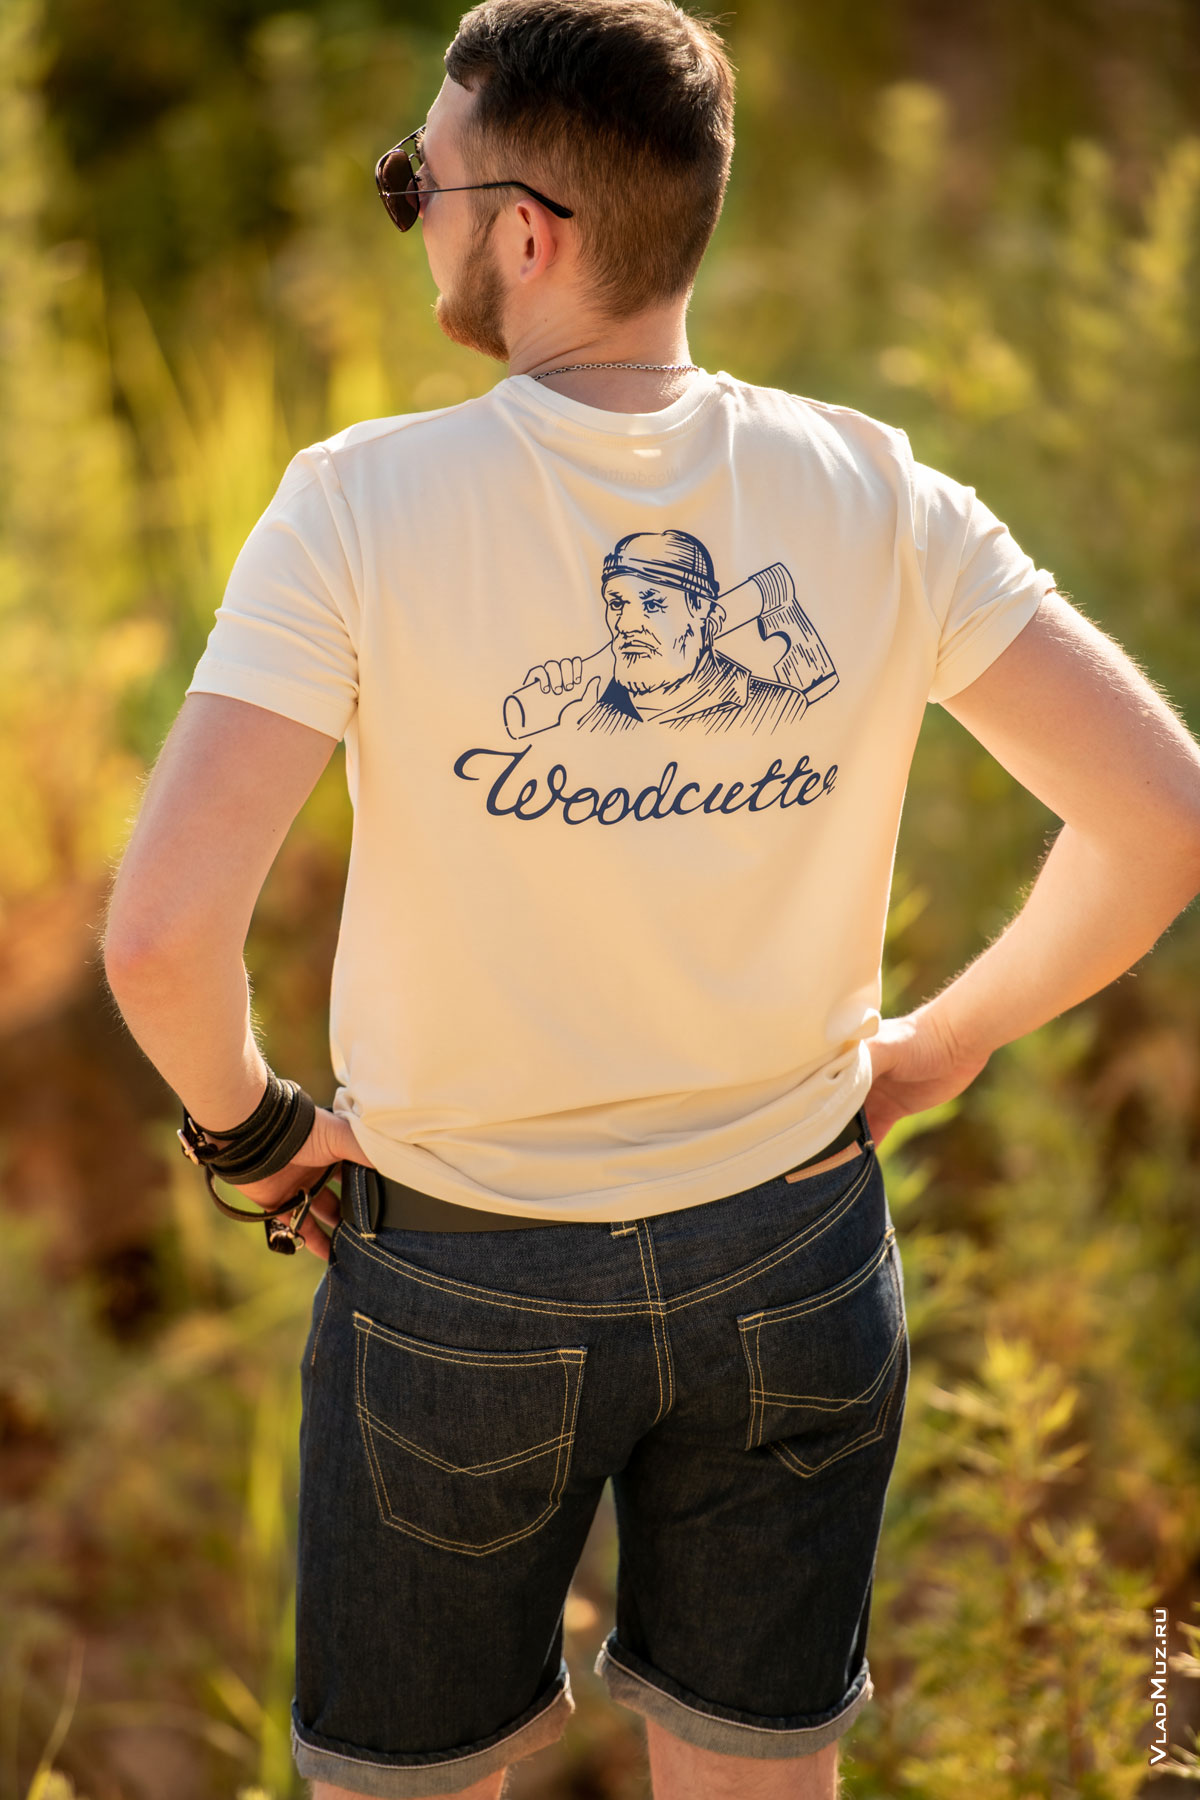 Фото мужчины в шортах и футболке с логотипом Woodcutter на фоне природы